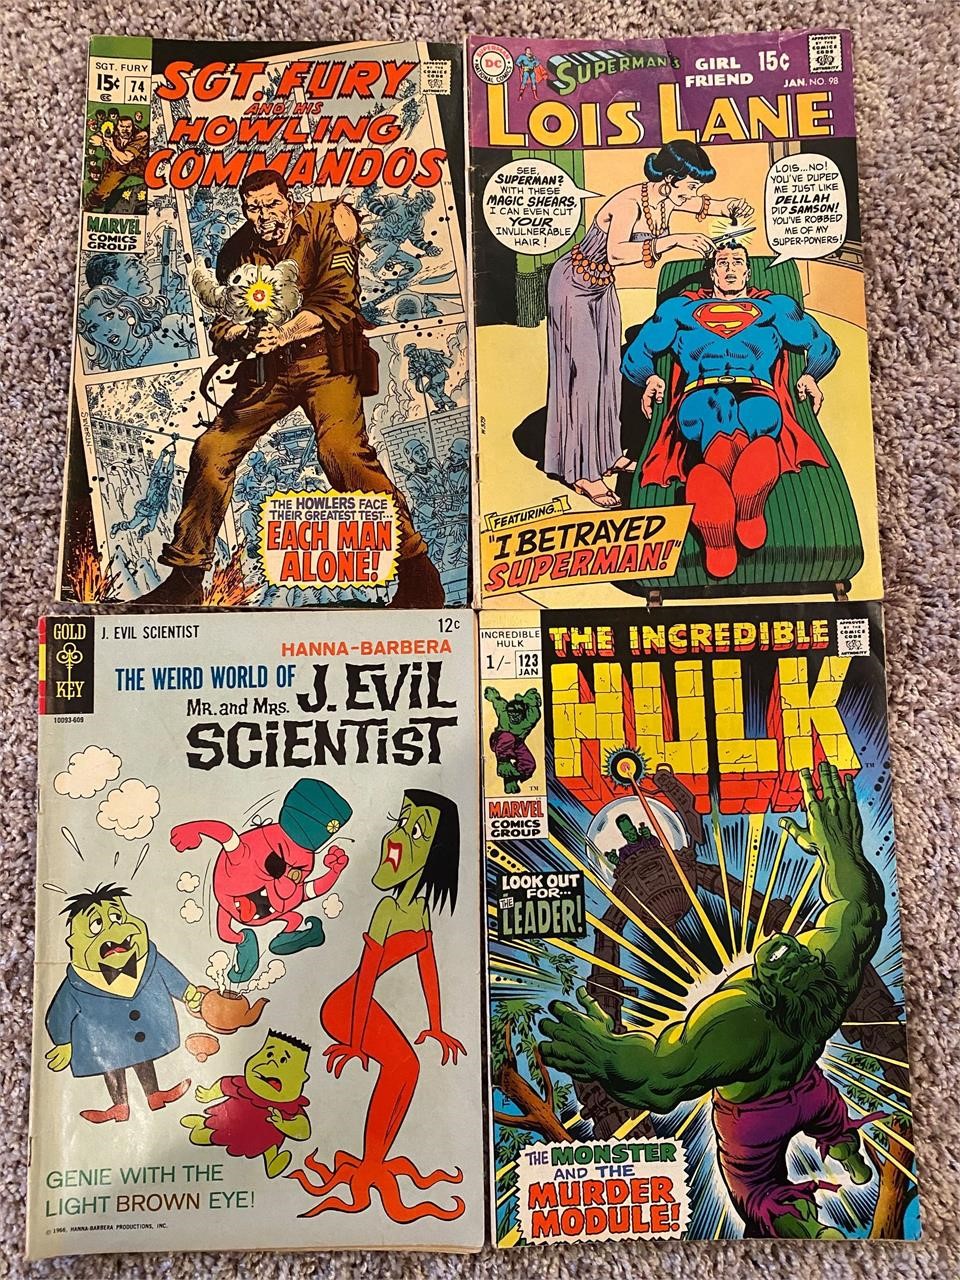 Superman - Hulk - STG. Fury - J. Evil. Scientist